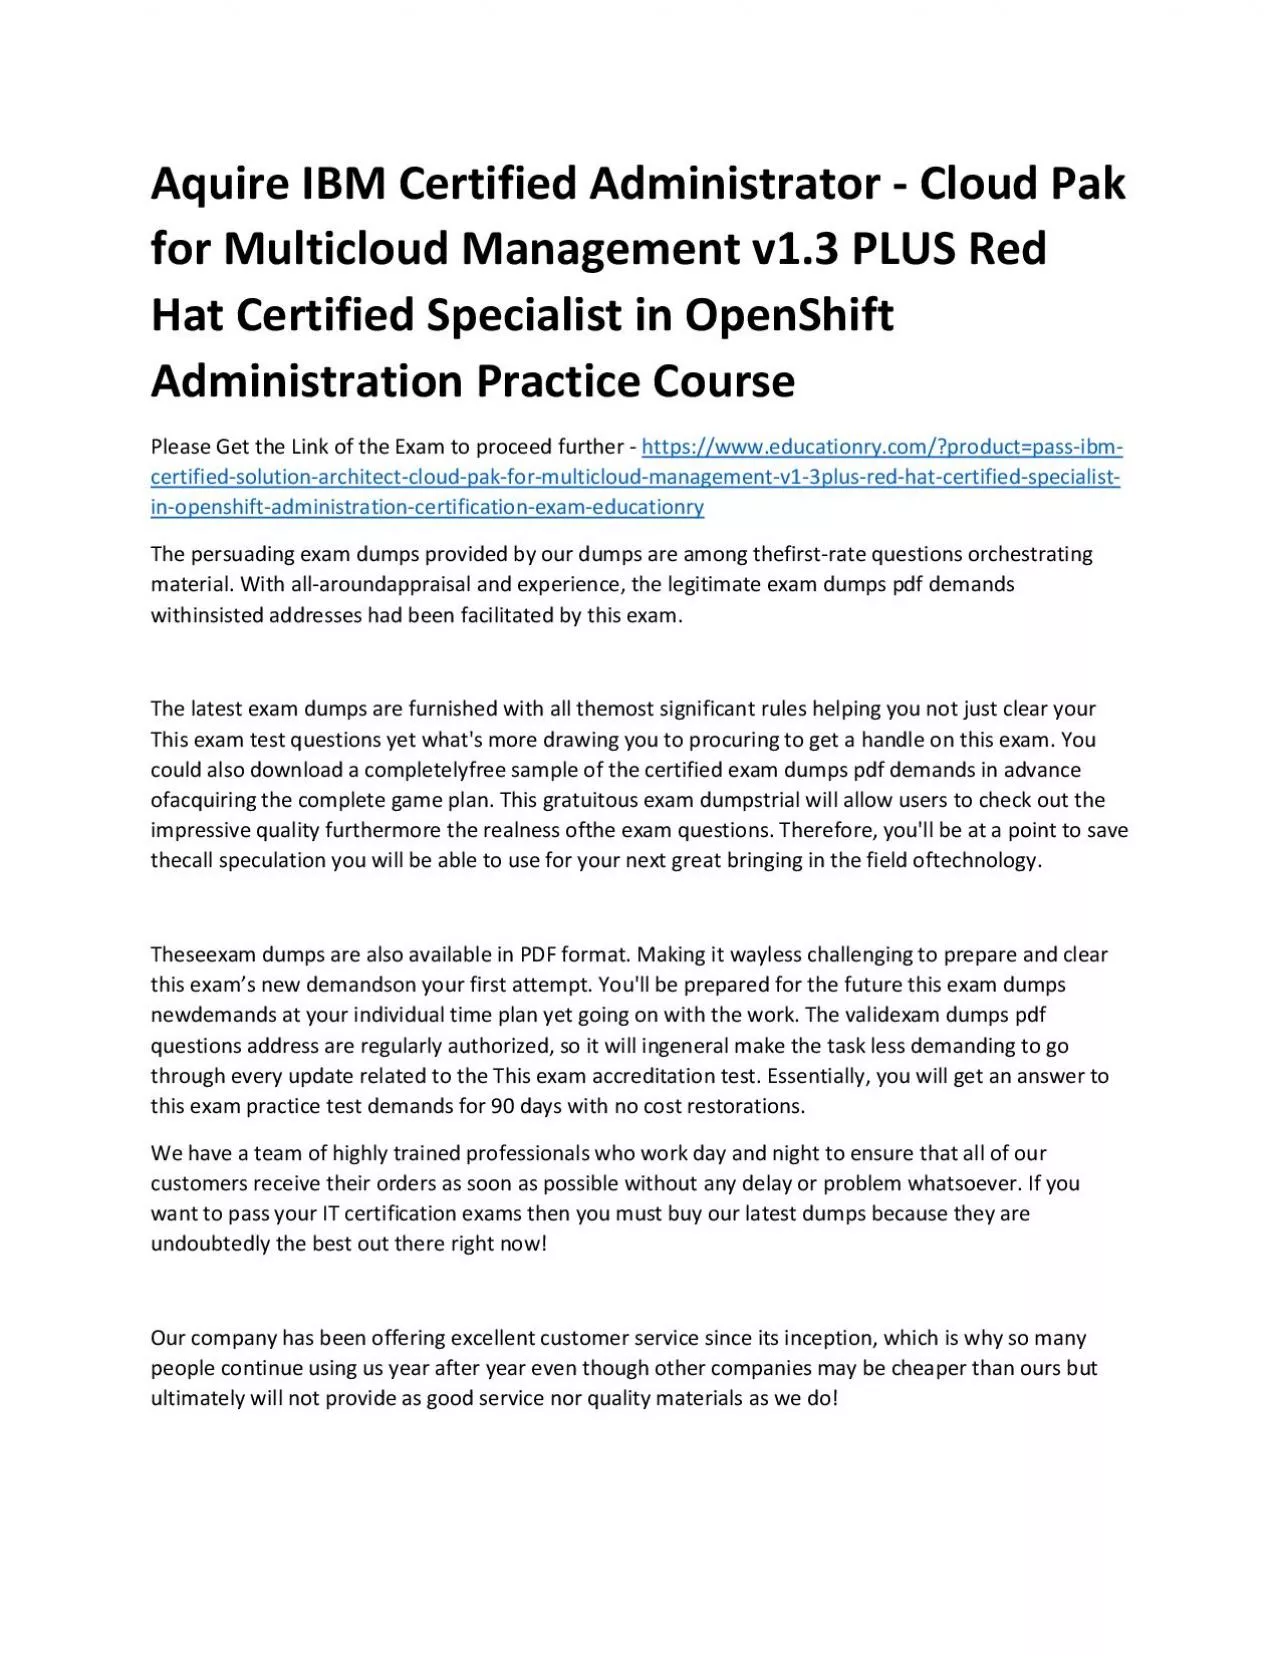 C0006600: IBM Certified Administrator - Cloud Pak for Multicloud Management v1.3 PLUS